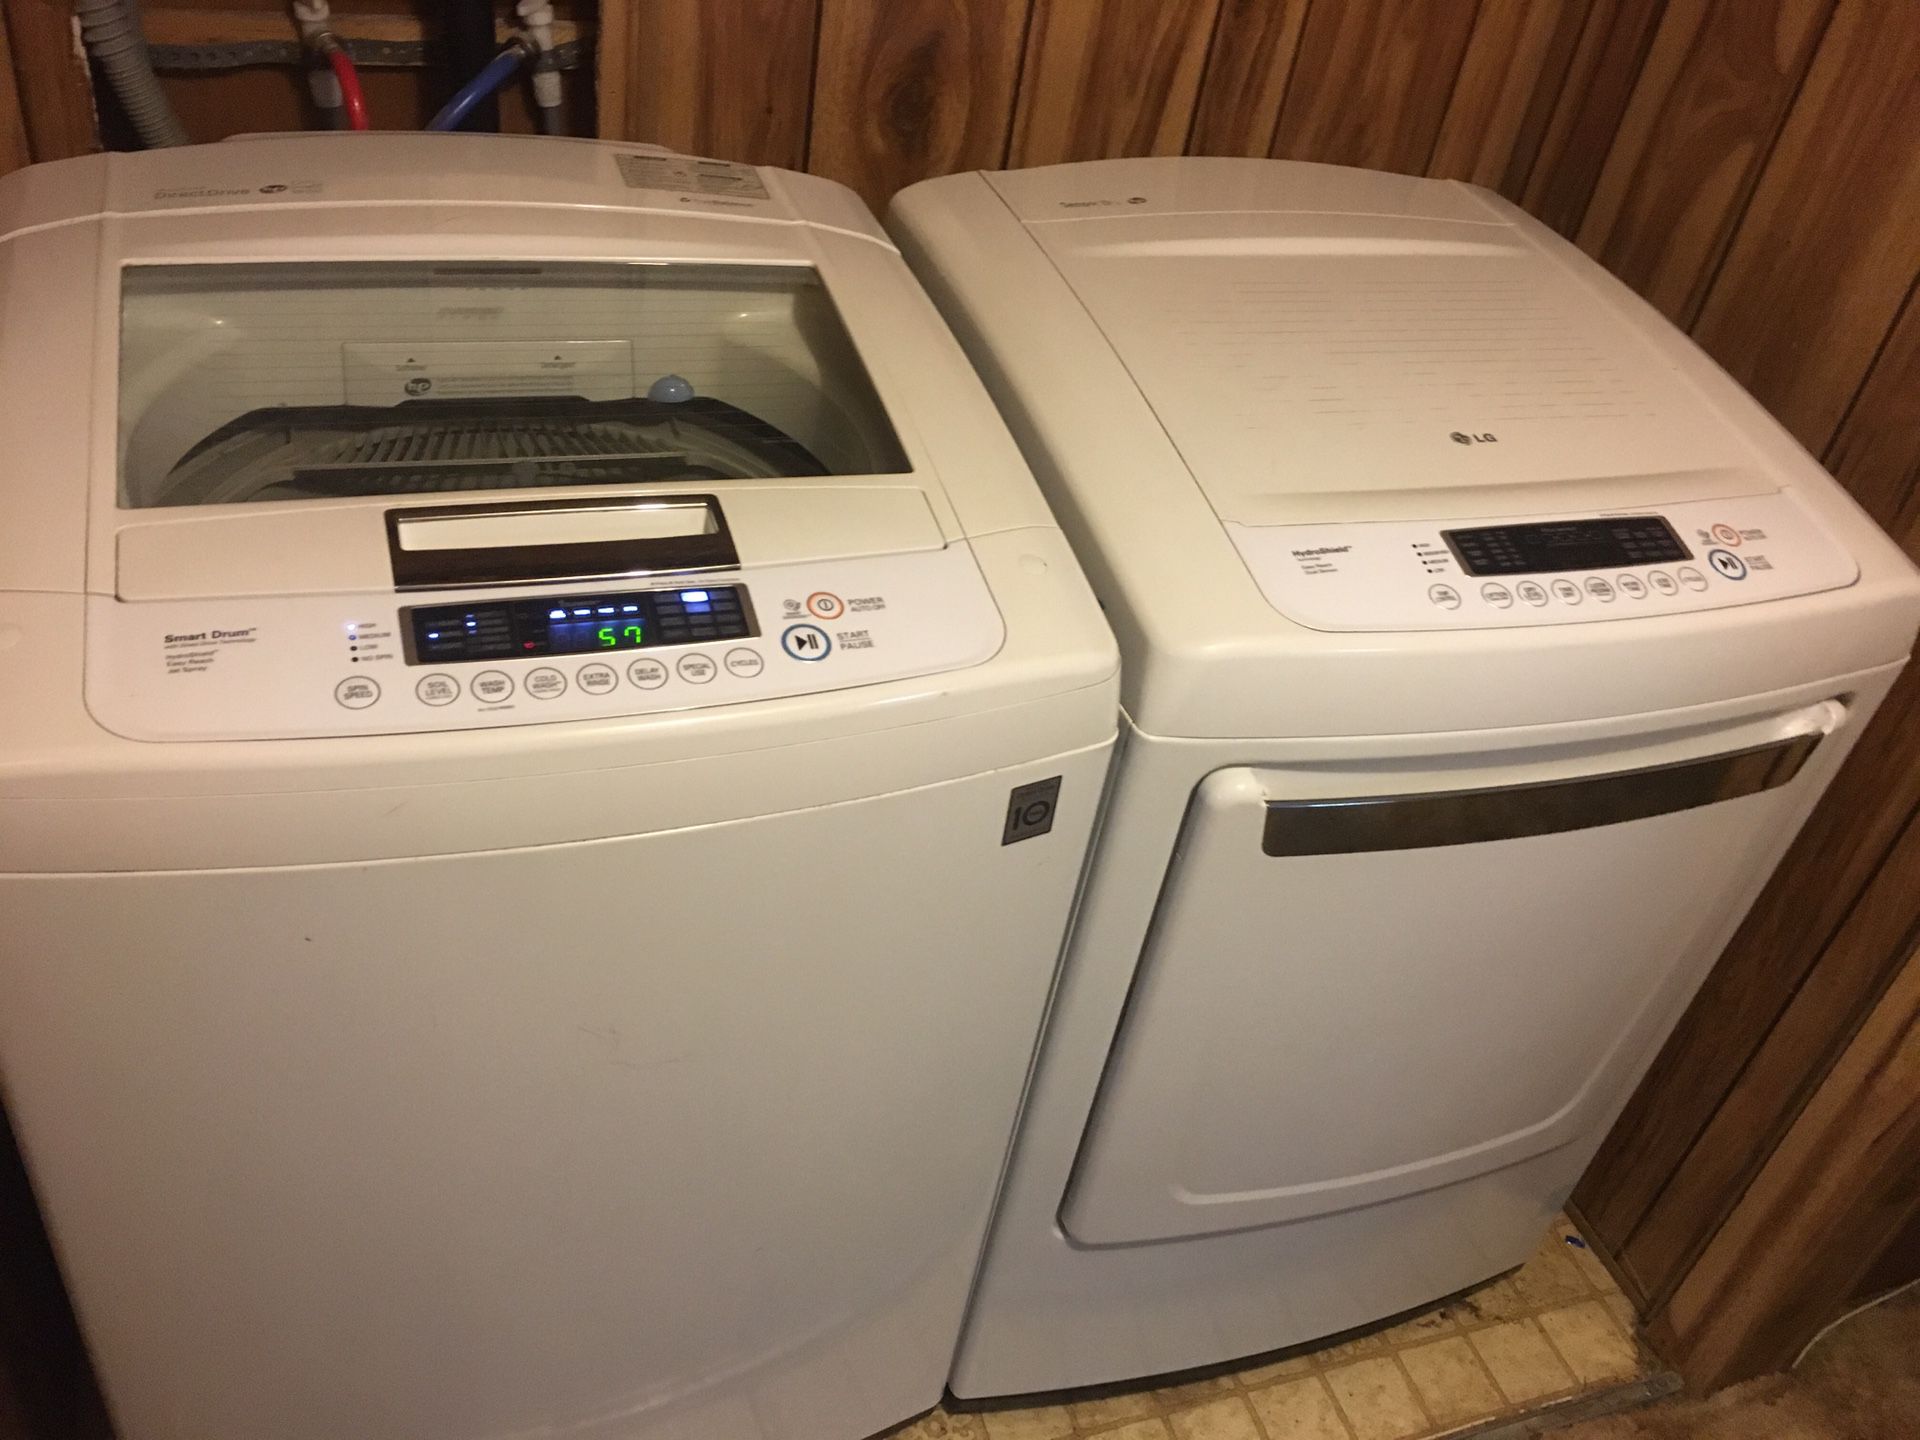 Lg washer dryer set